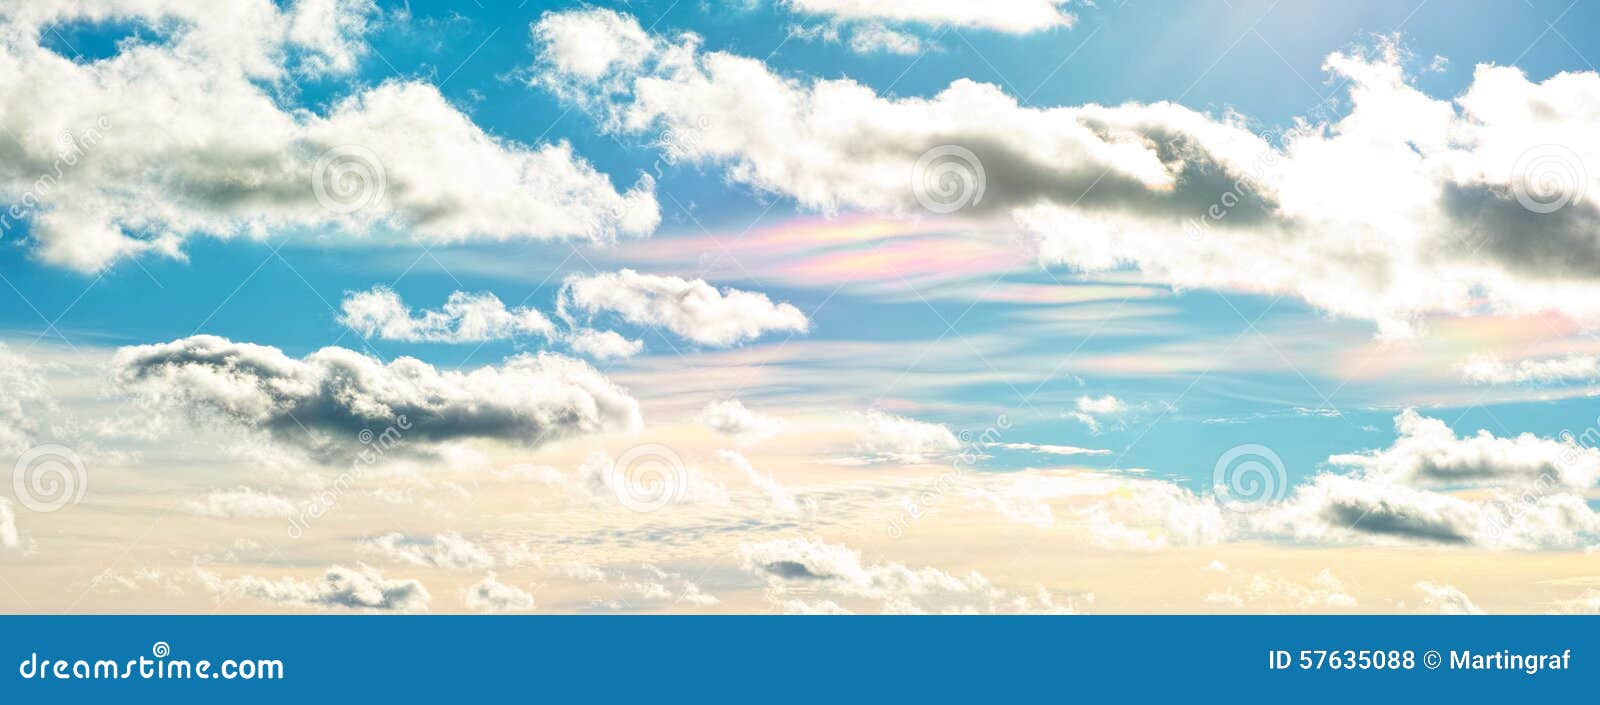 cloud iridescence in blue sky, effect of sunlight